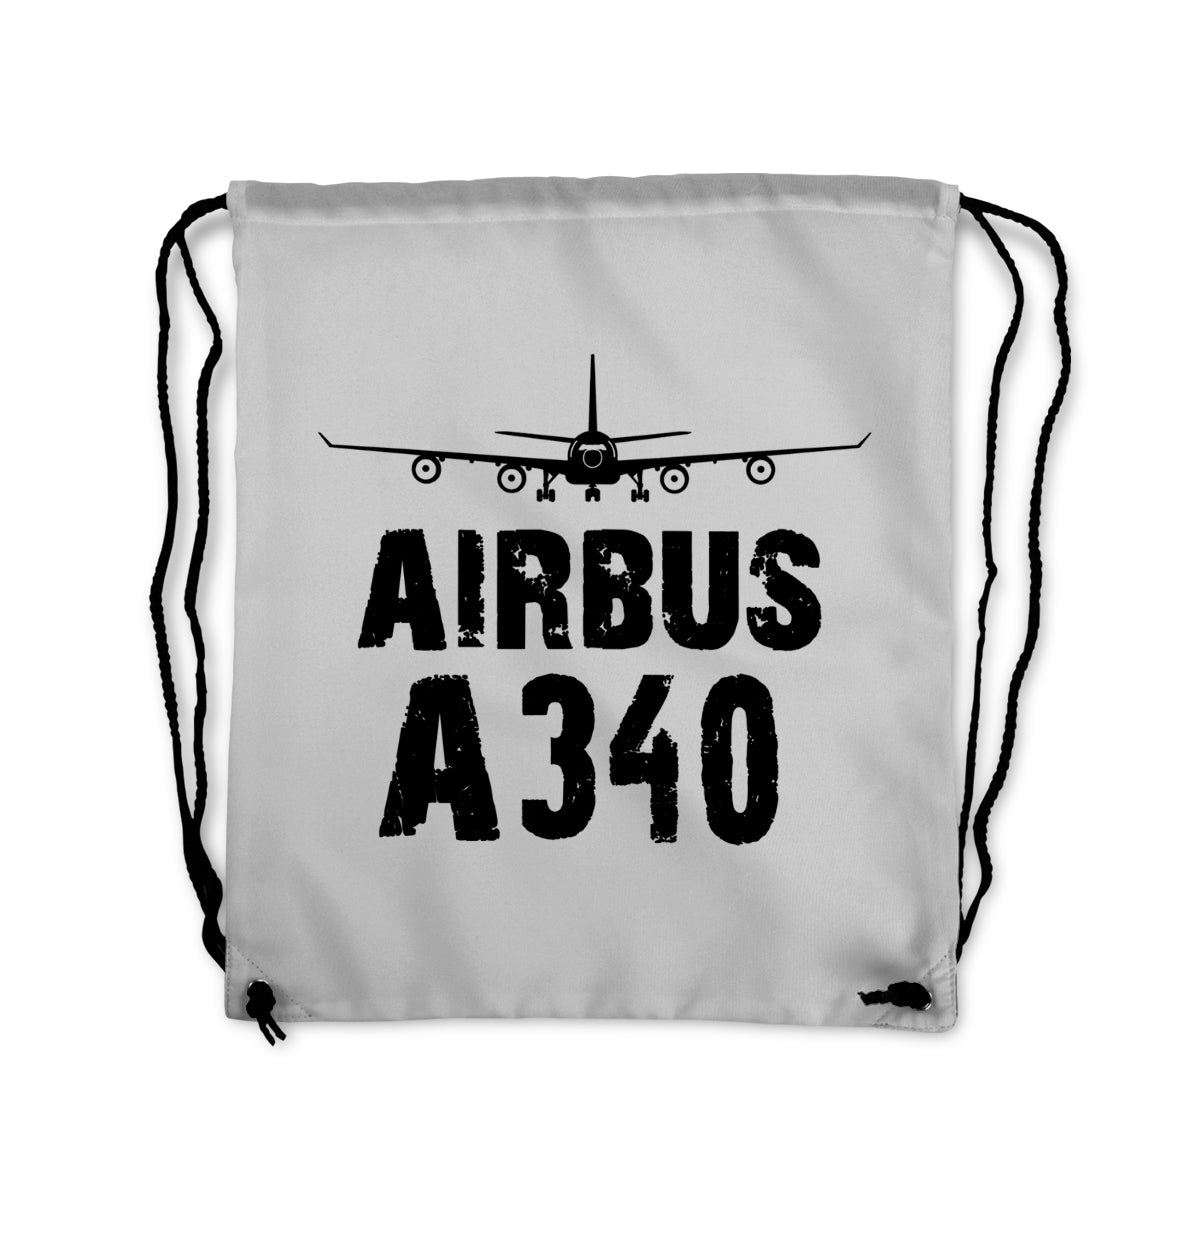 Airbus A340 & Plane Designed Drawstring Bags